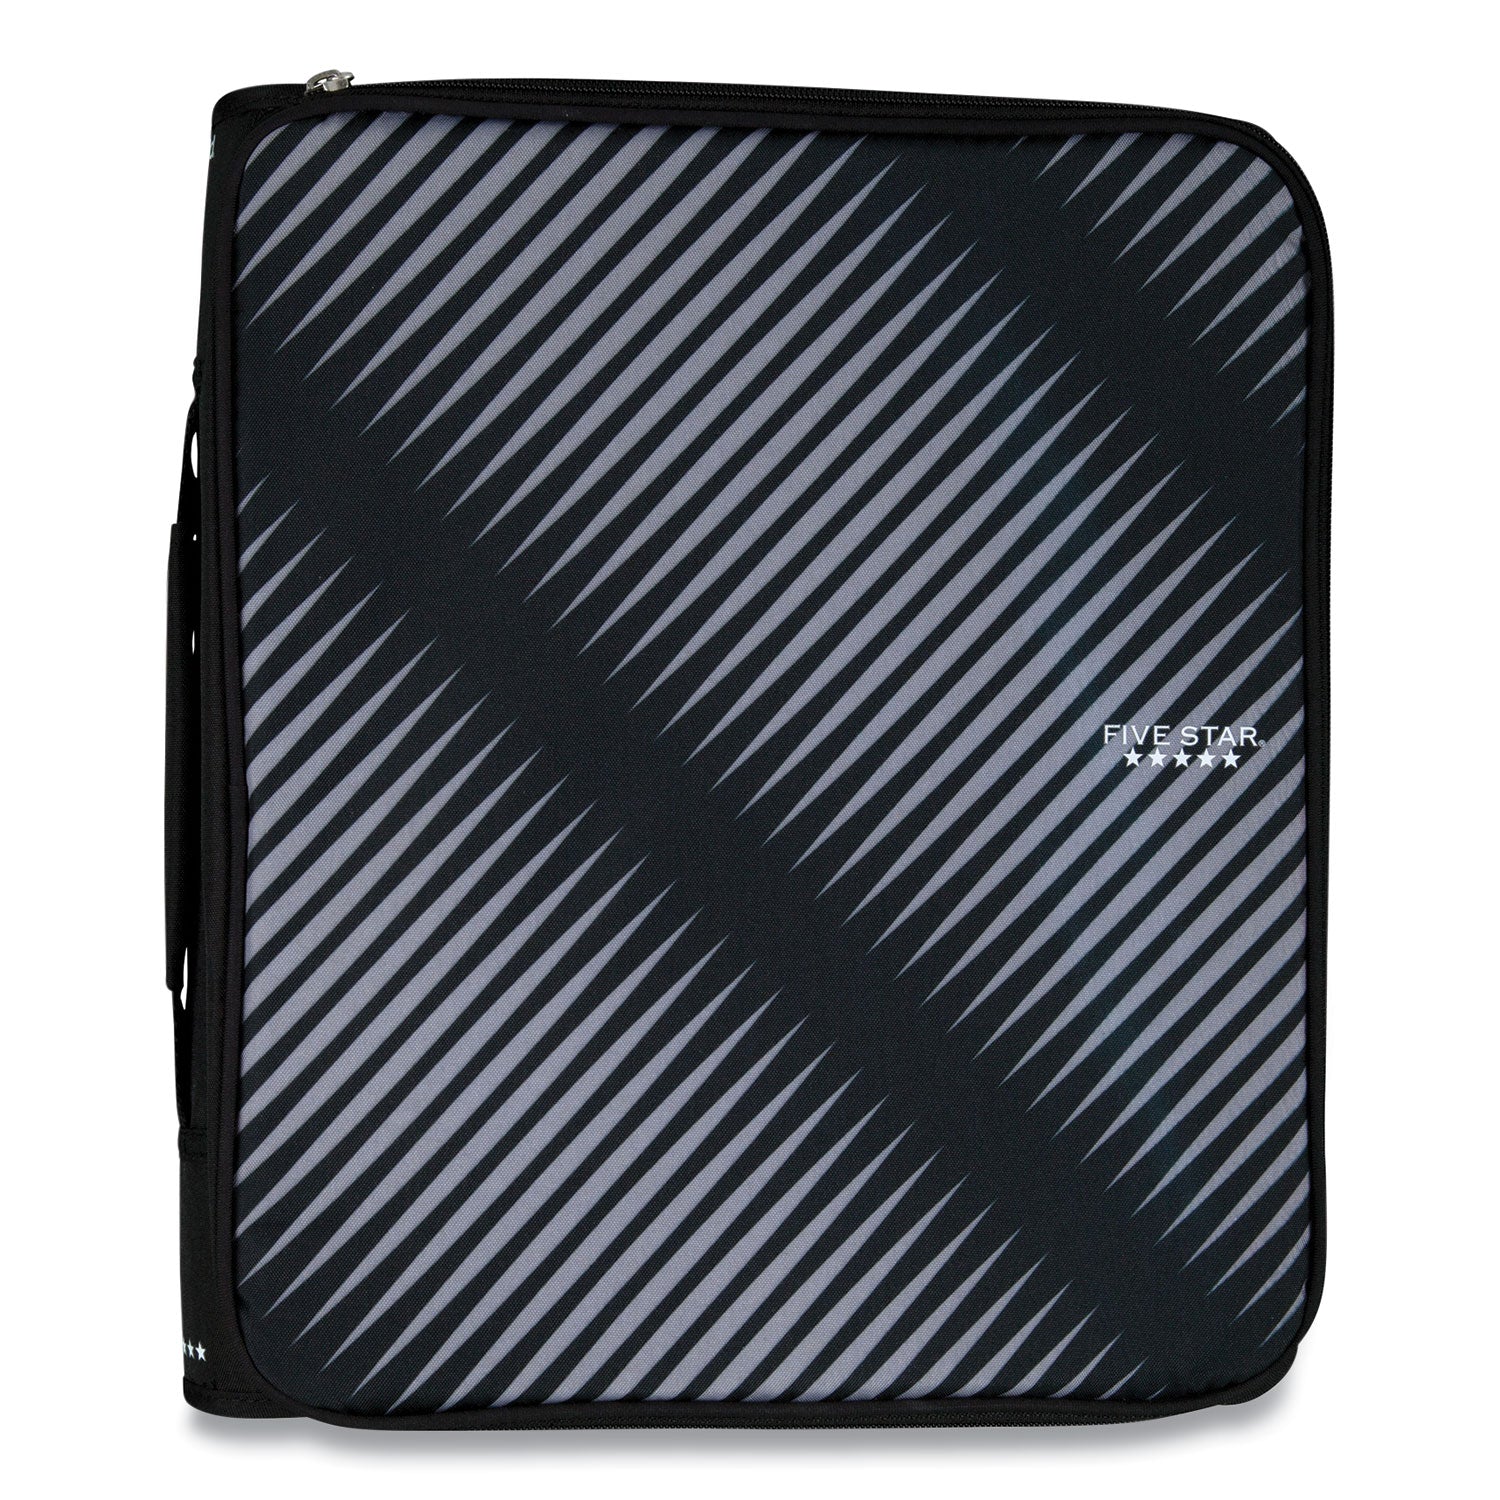 zipper-binder-3-rings-2-capacity-11-x-85-black-gray-zebra-print-design_acc72536ea - 1